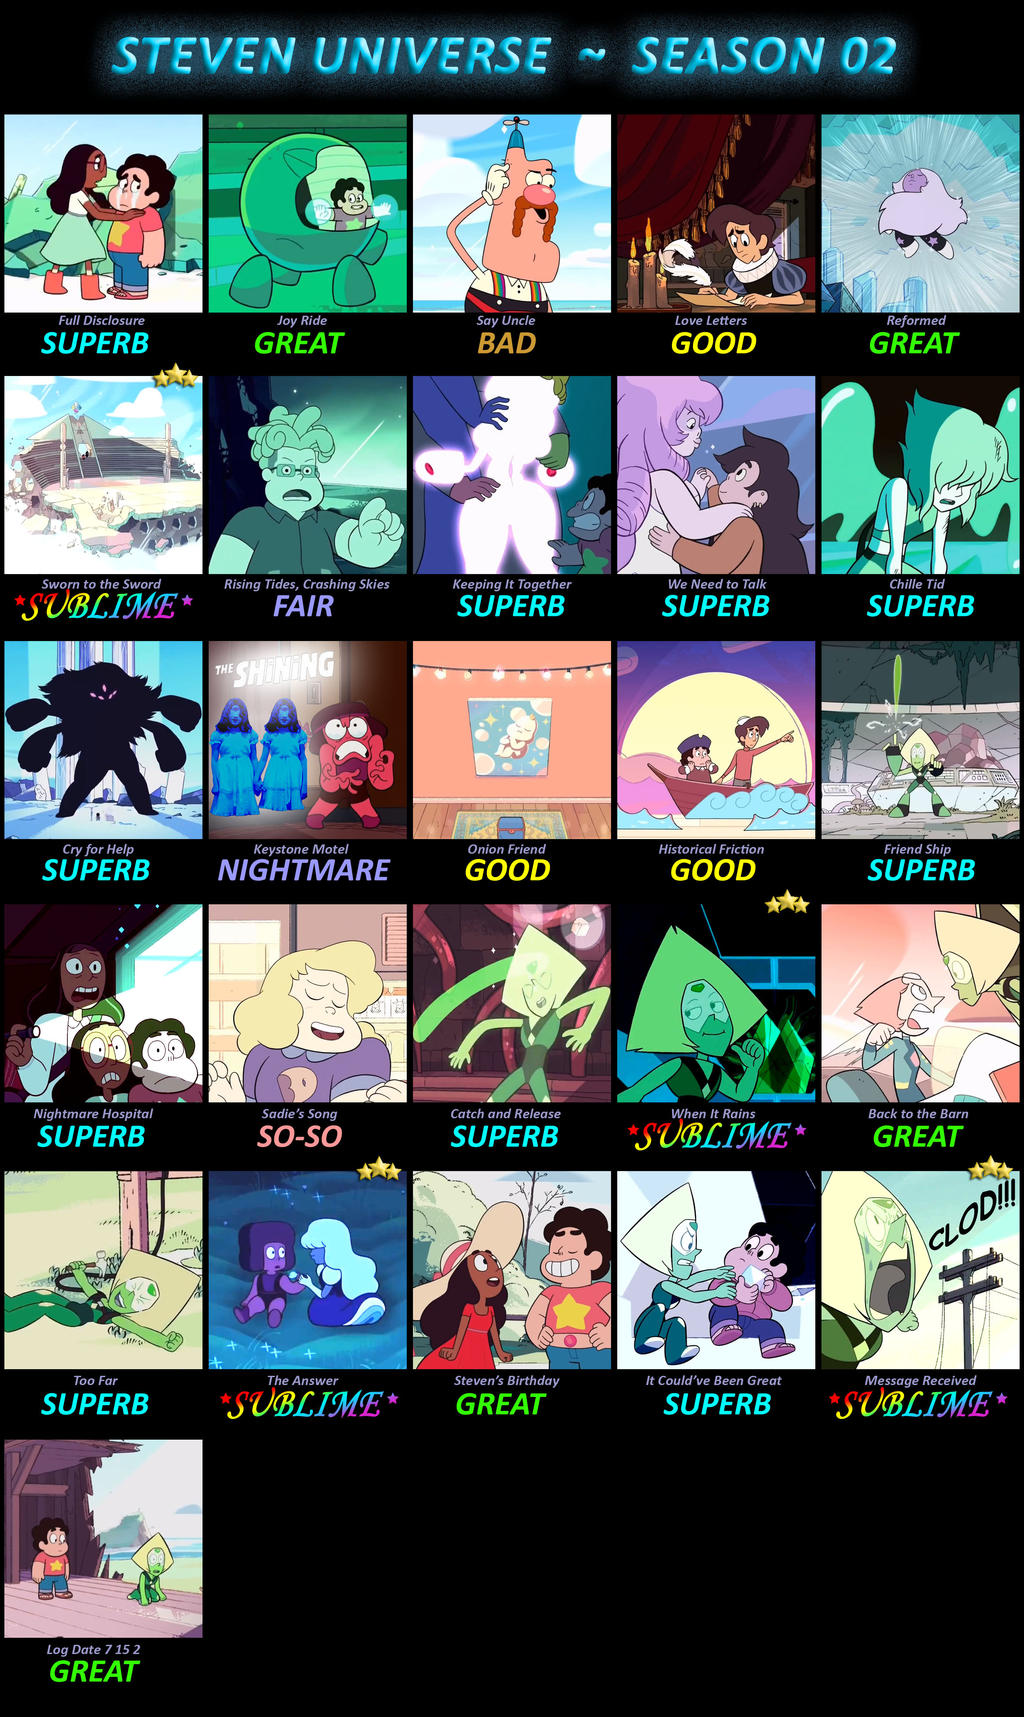 Steven Universe Season 5 Scorecard by Guacola772 on DeviantArt